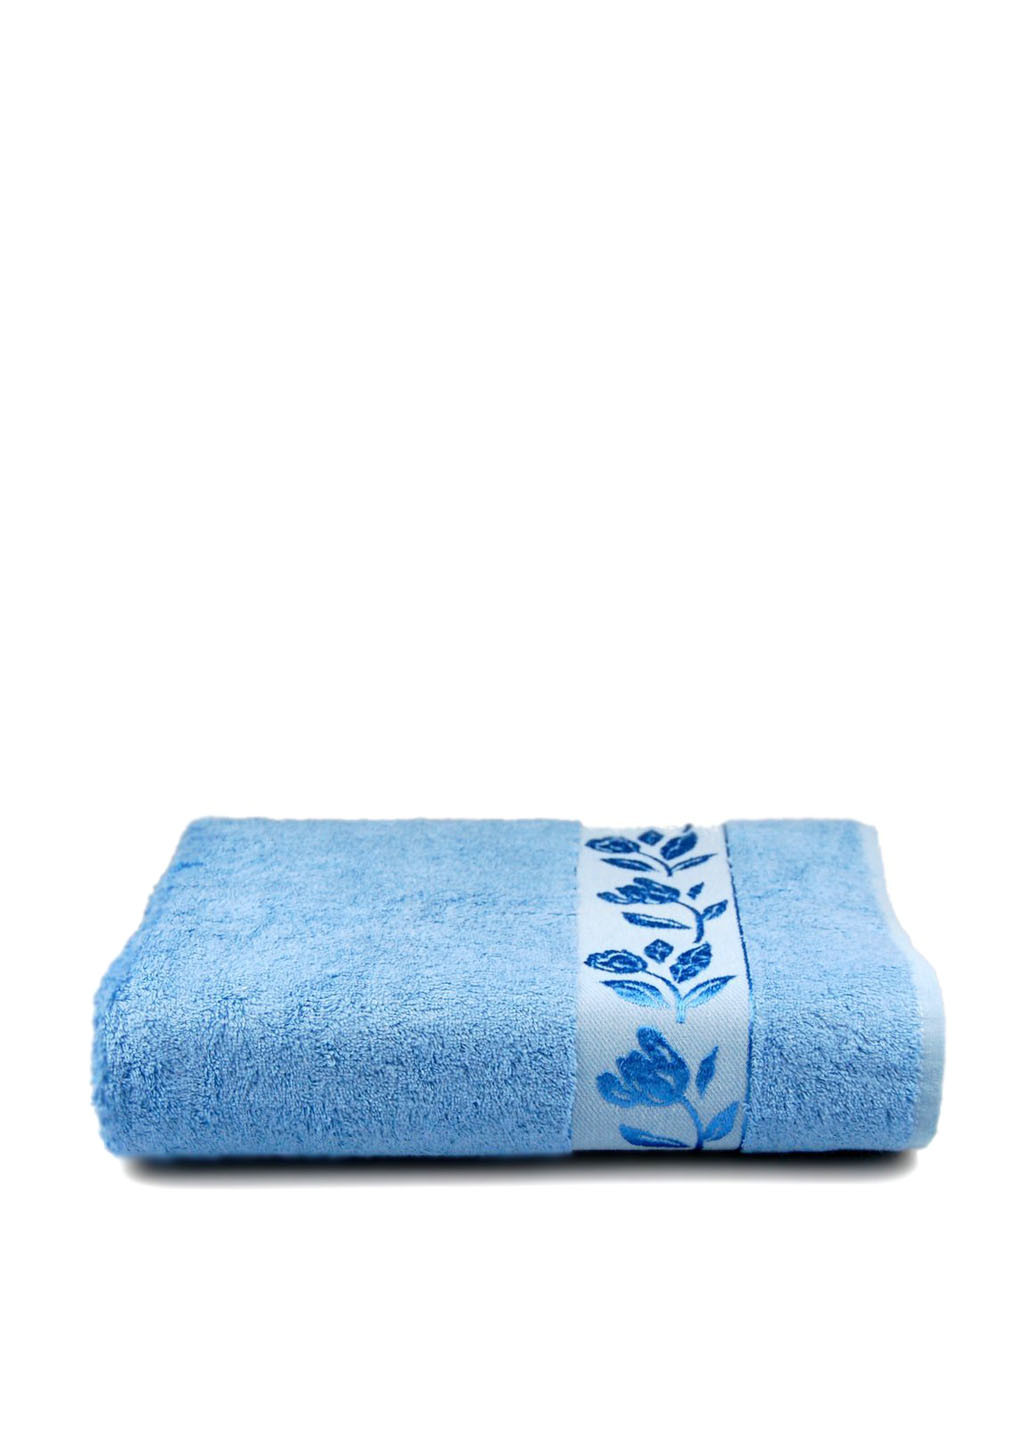 Home Line полотенце, 70х140 см цветочный голубой производство - Турция